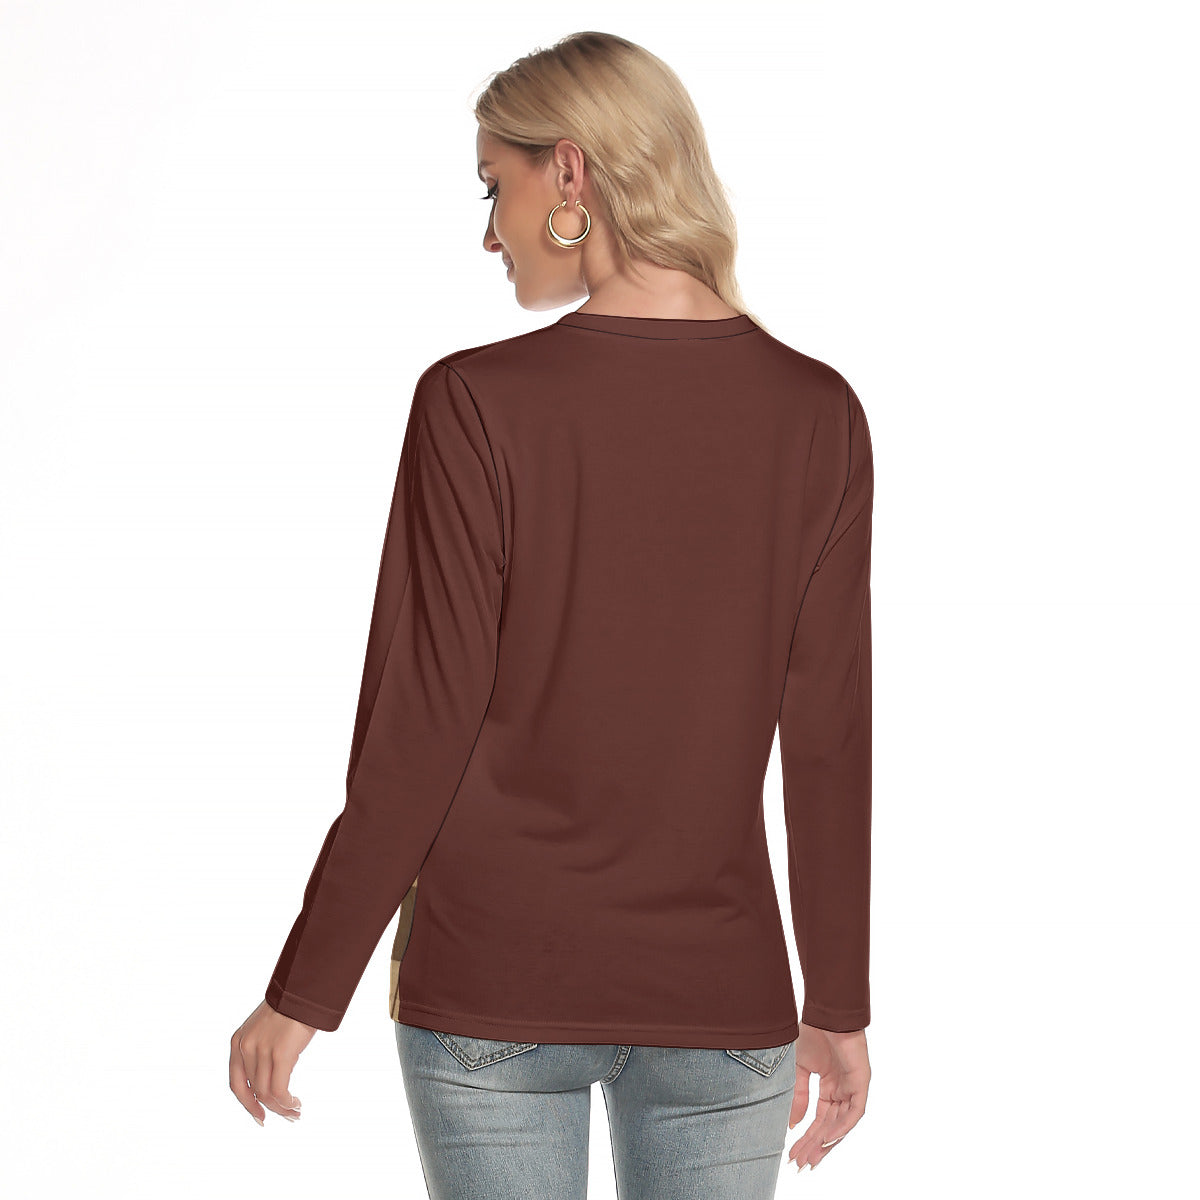 Fantasy Stripes 102 -- Women's O-neck Long Sleeve T-shirt